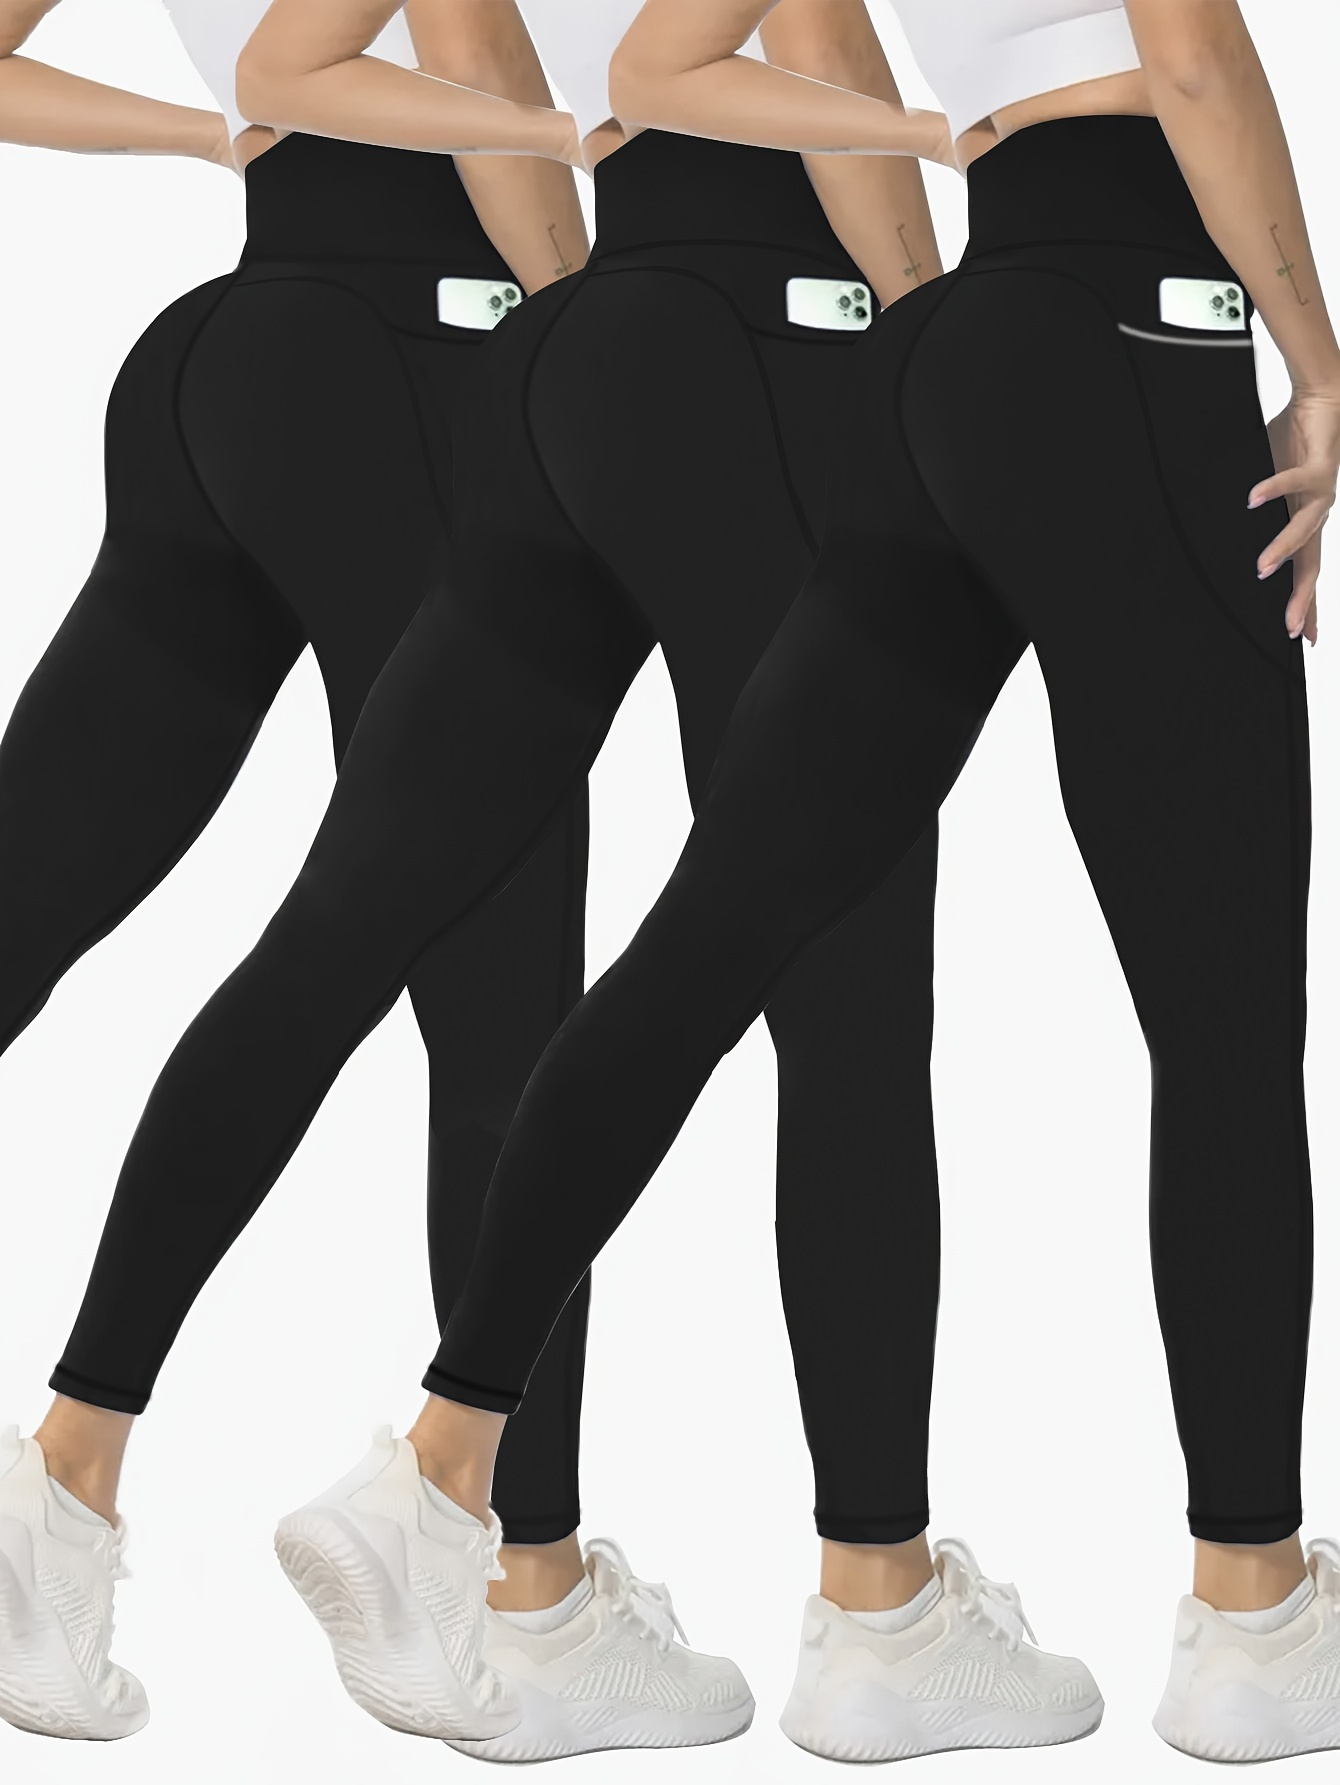 IUGA Women's Cross Waist Yoga Leggings with Pockets for Women